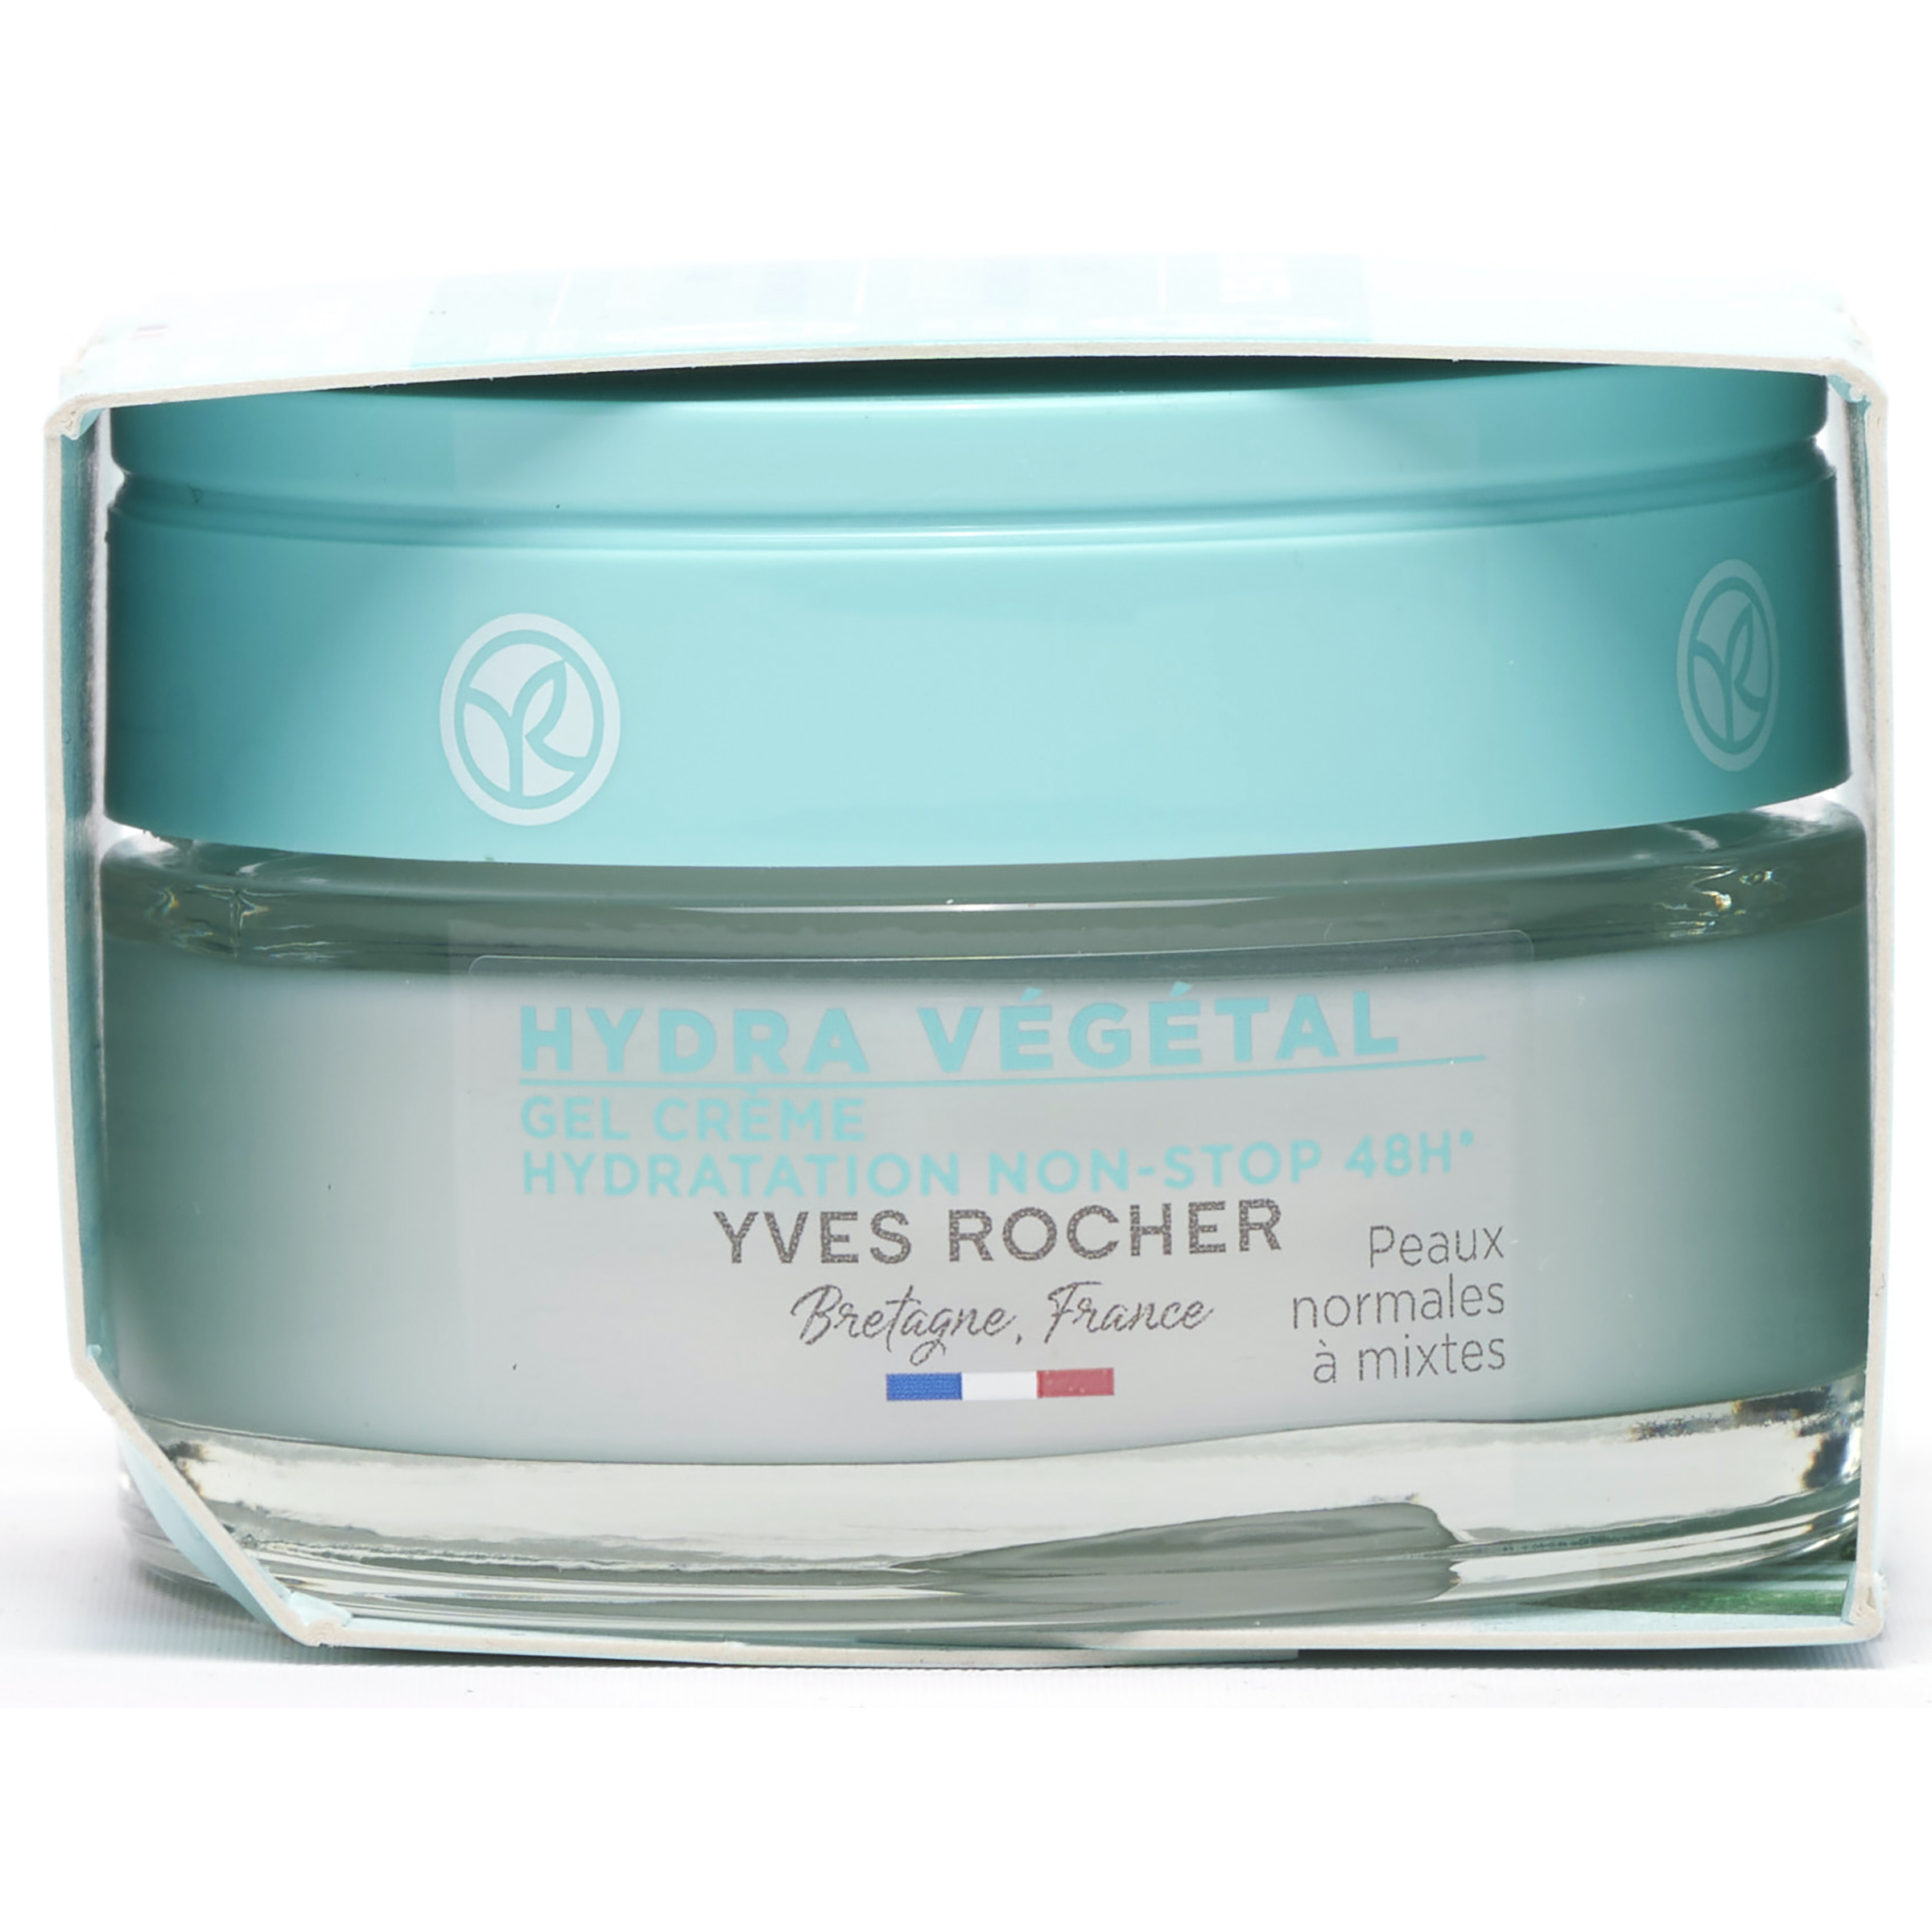 Test Yves Rocher Hydra végétal gel crème hydratation non-stop 48 h ...